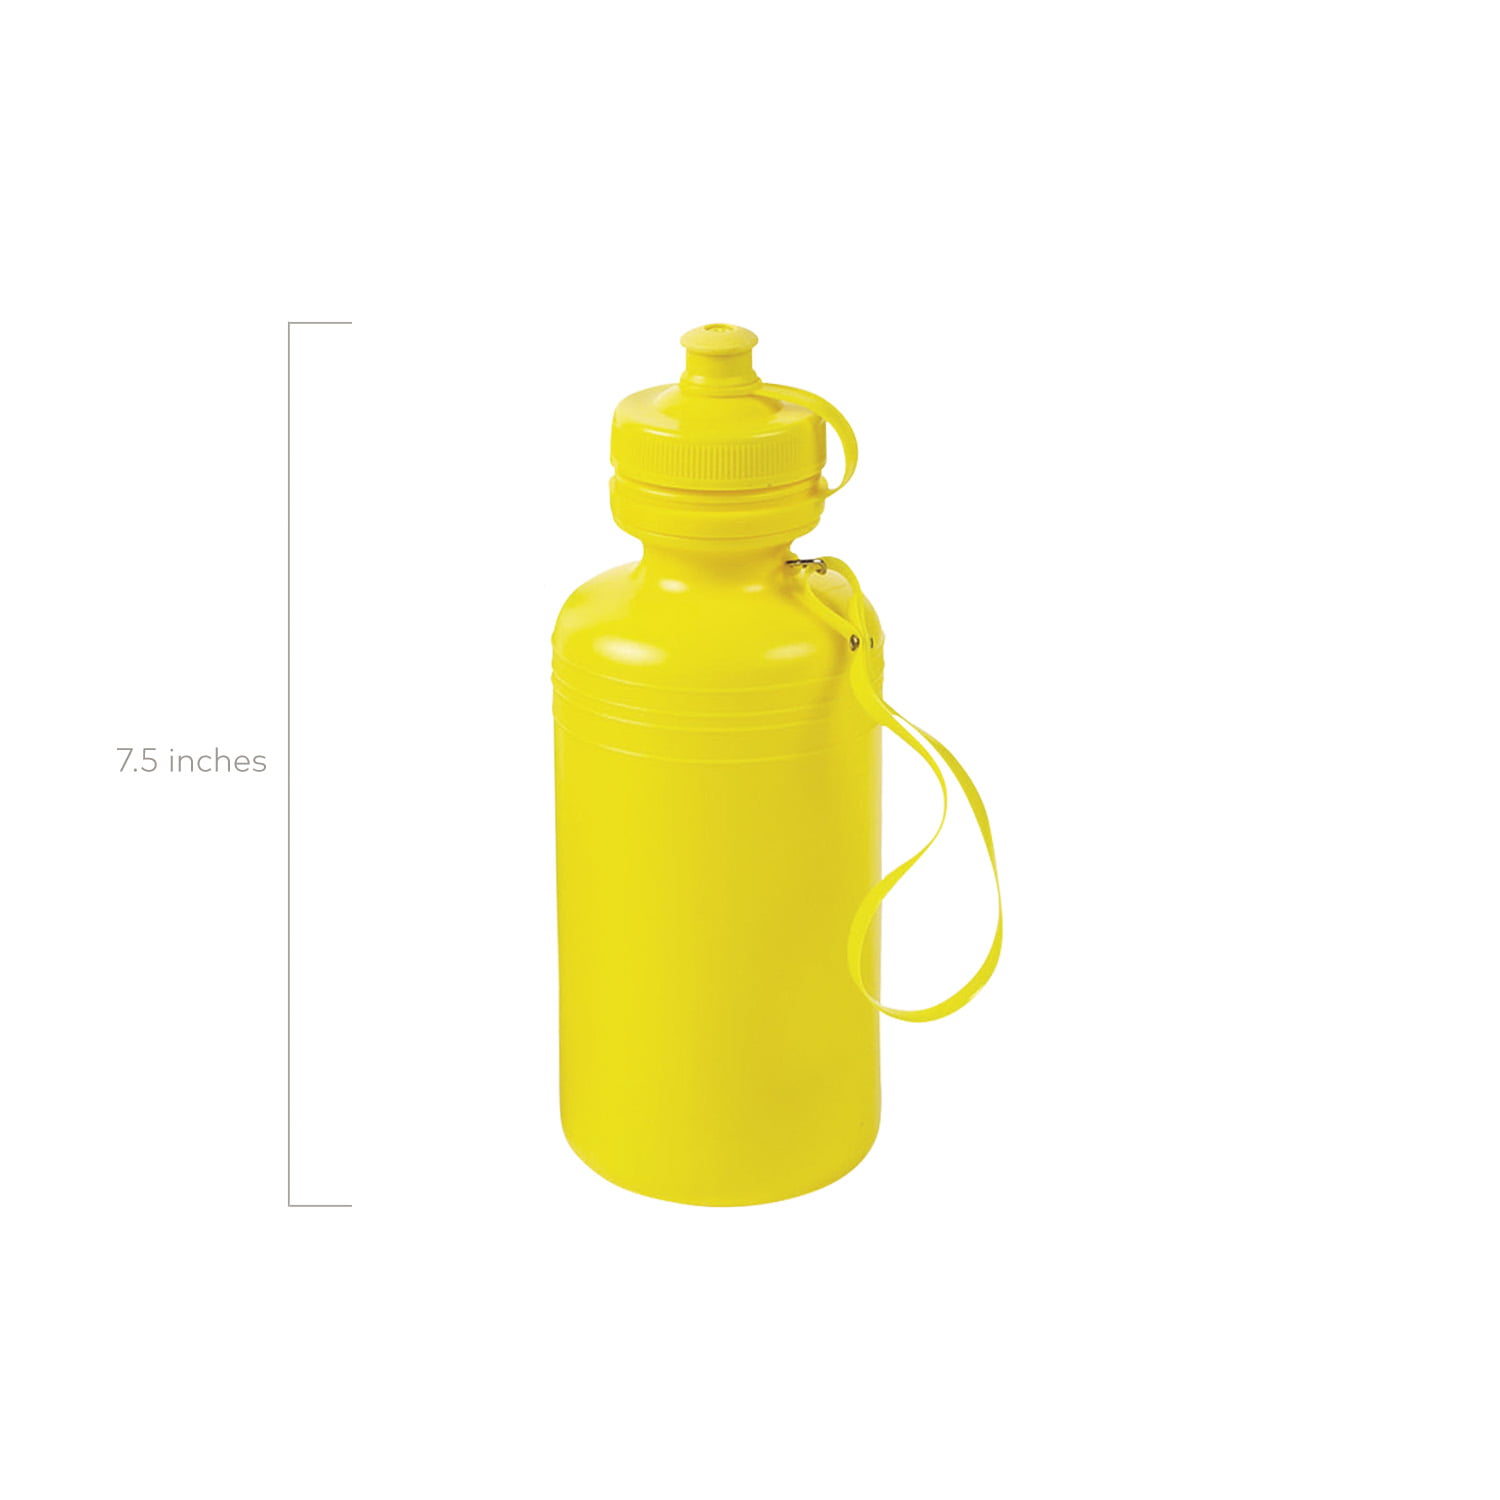 4E's Novelty 12 Sports Water Bottles Bulk (12 Pack) 18 oz Squeeze Reusable  Plastic White Water Bottl…See more 4E's Novelty 12 Sports Water Bottles